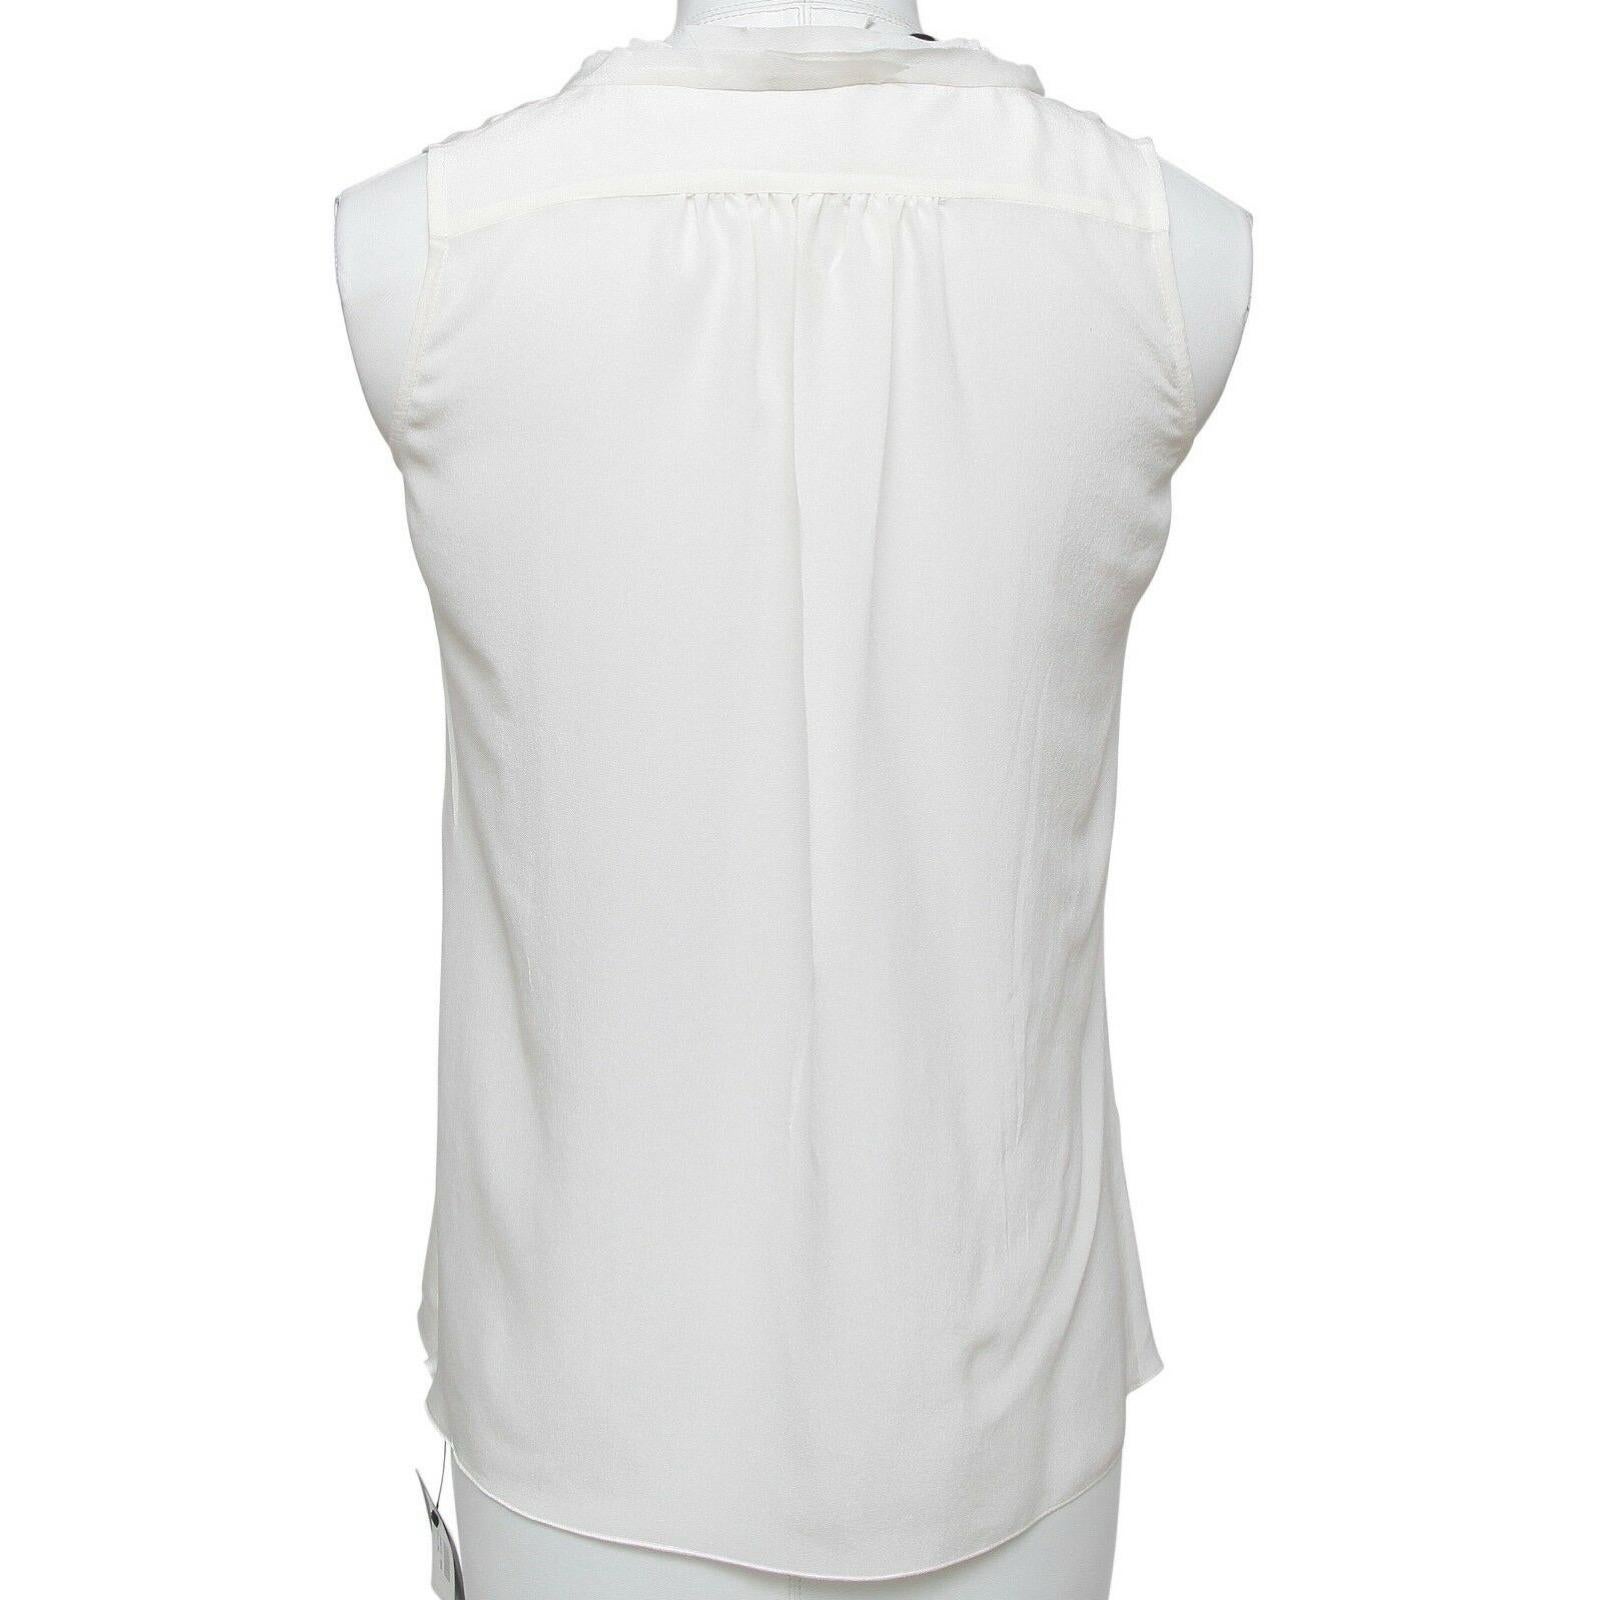 MIU MIU Blouse Top Shirt Sleeveless Silk Ivory Ruffle Sz 36 BNWT For Sale 1